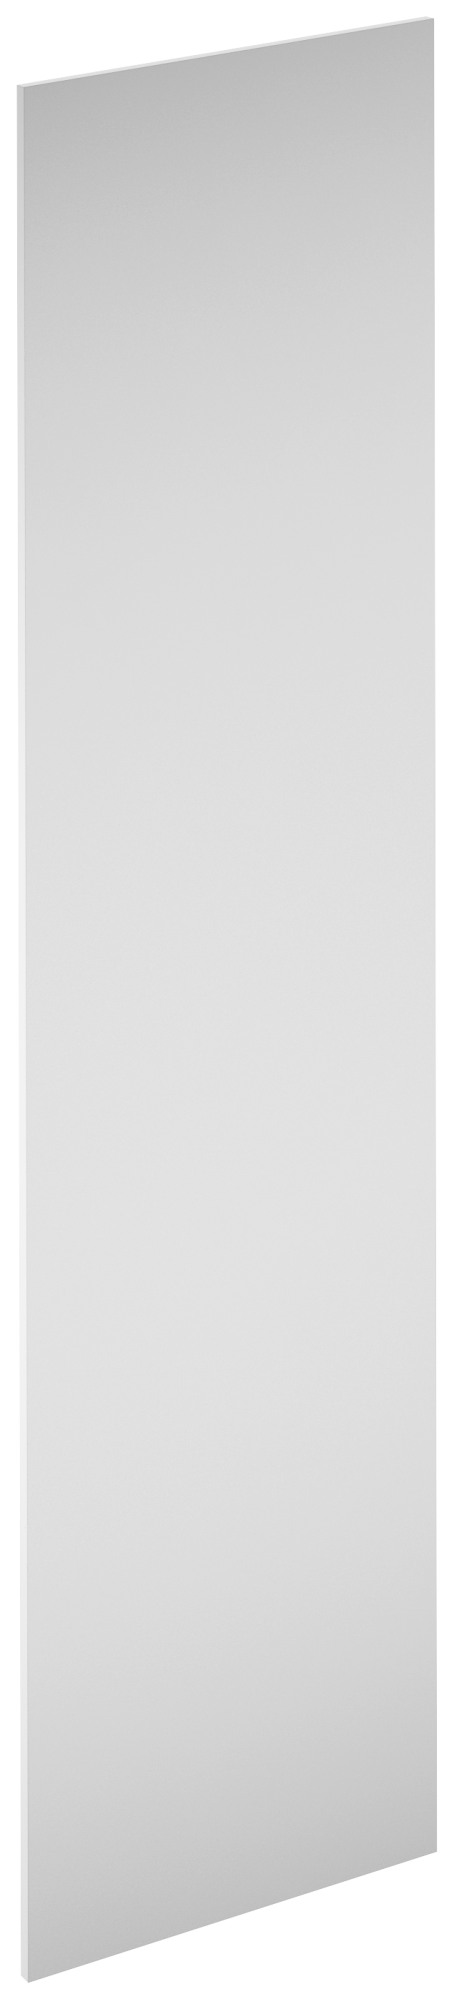 Costado para mueble de cocina sofia blanco mate h 236.4 x l 60 cm